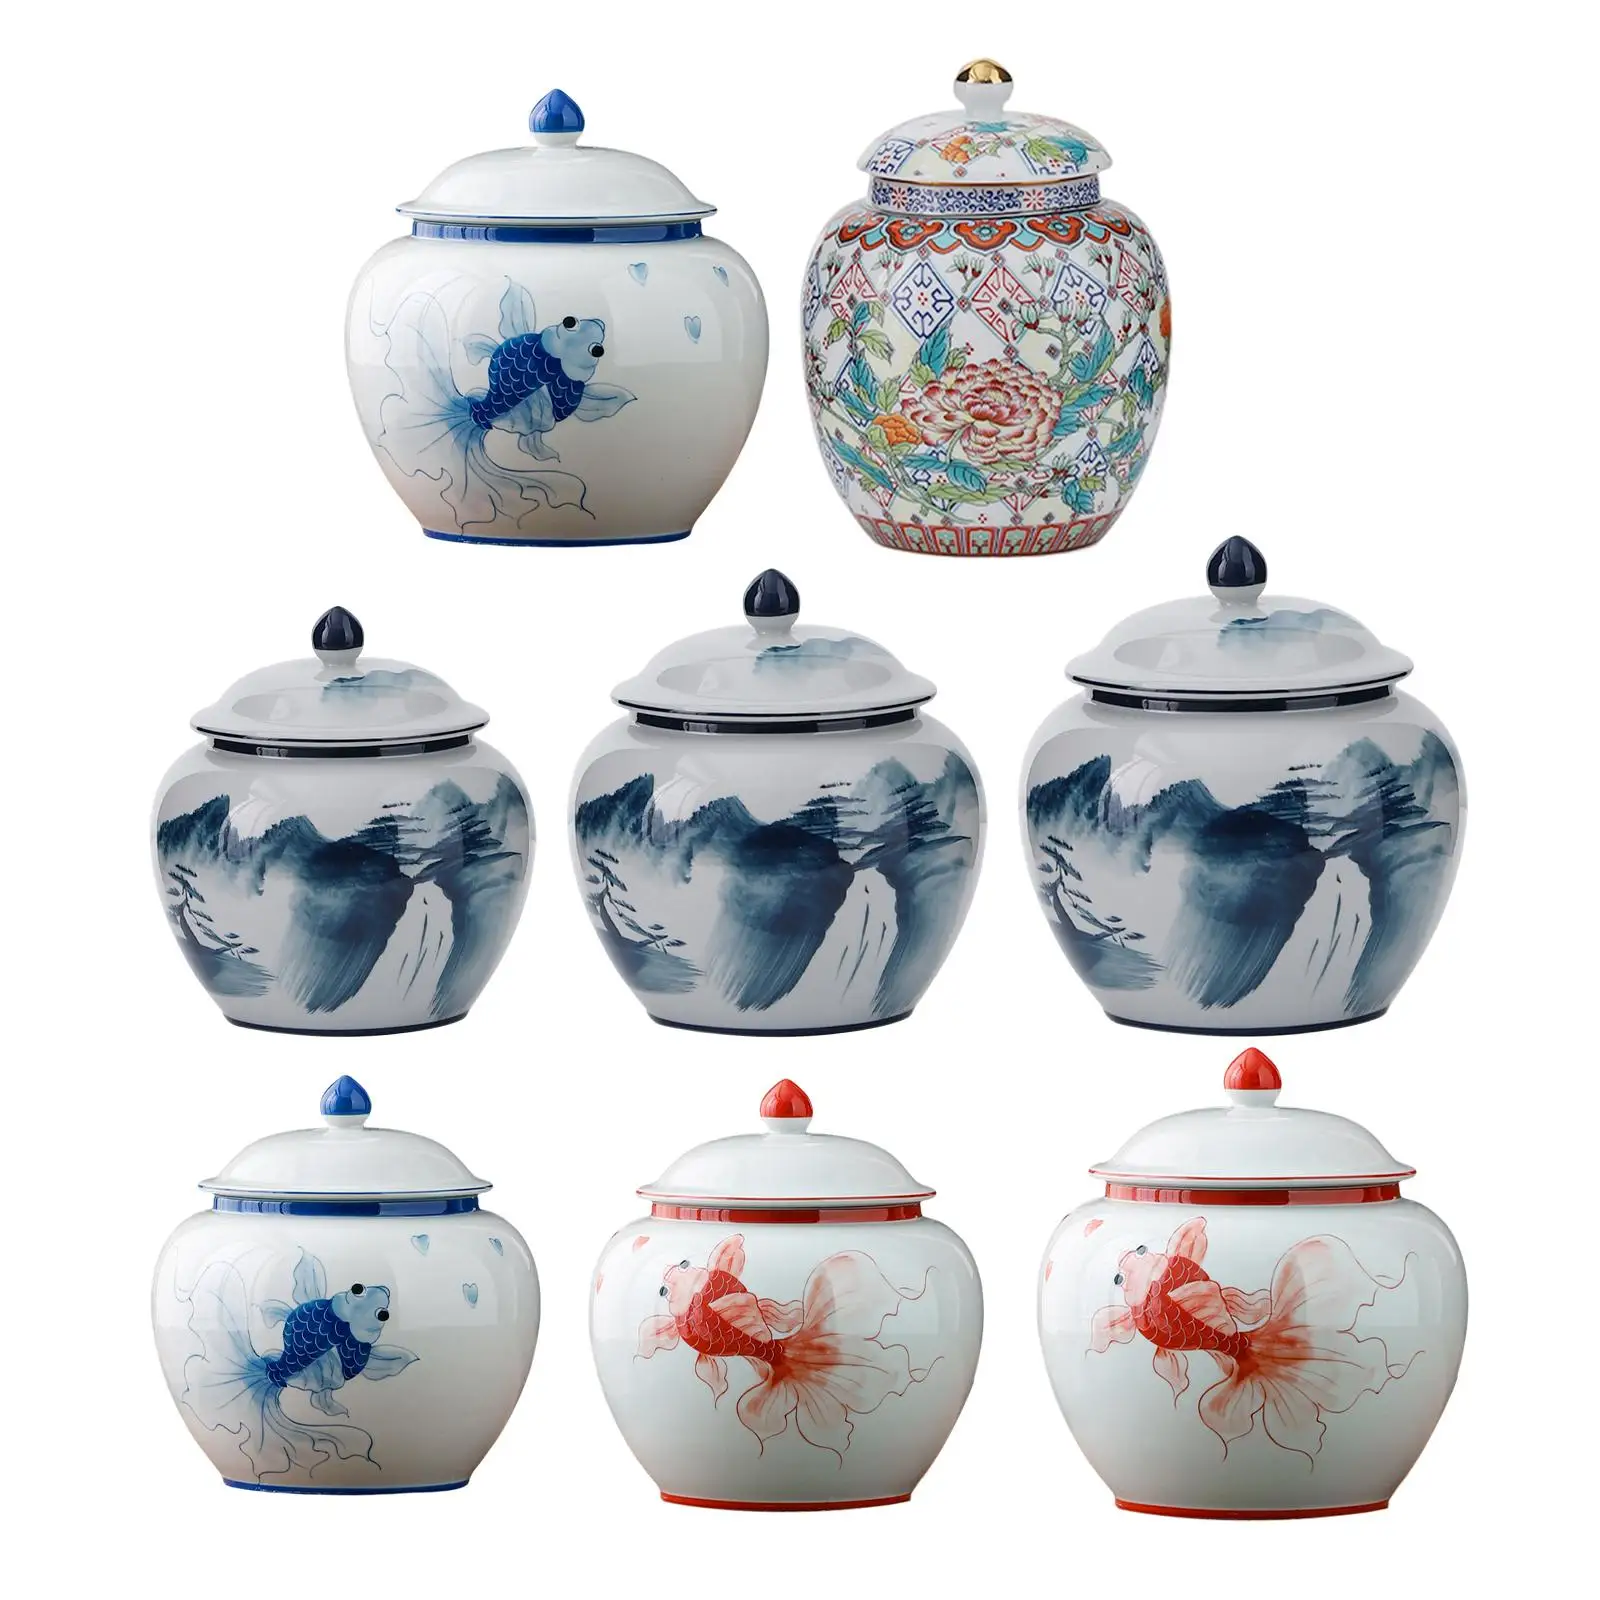 Porcelain Ginger Jar Temple Jar Storage Jar with Lid Multi Purpose Floral Arrangement Handicraft Classic Pattern Chinese Style